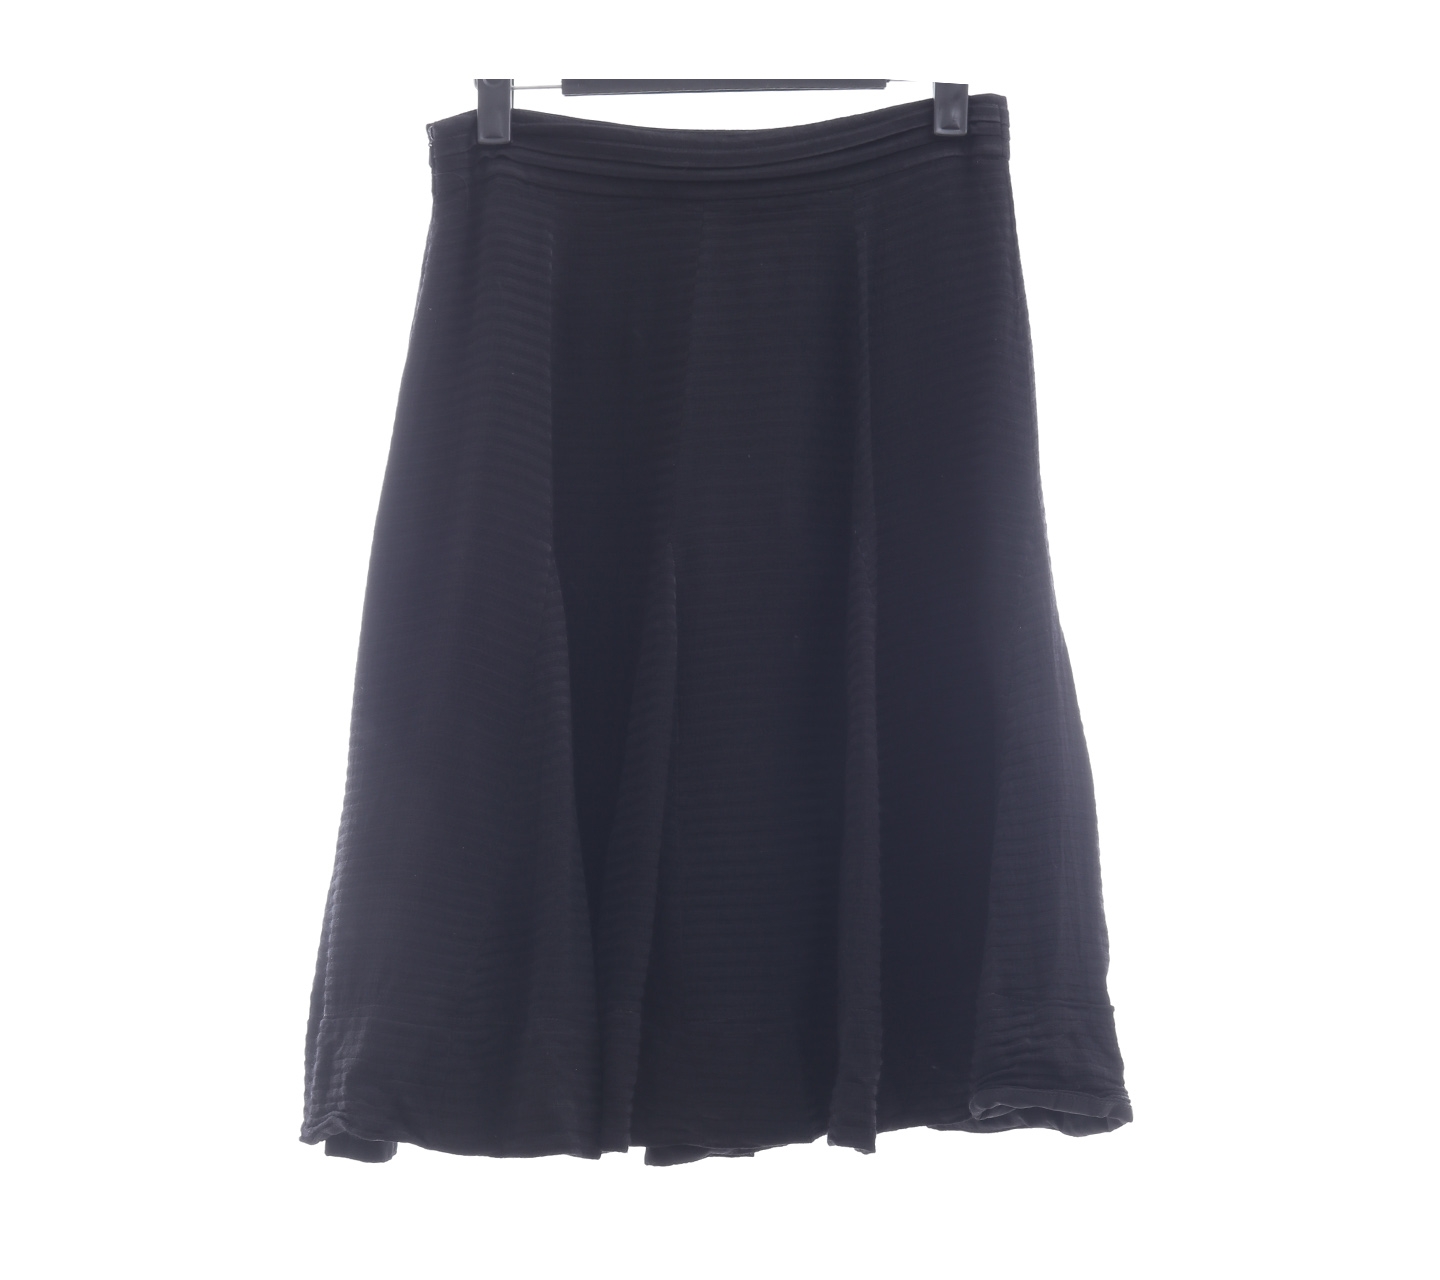 Jonathan Saunders Black Mini Skirt